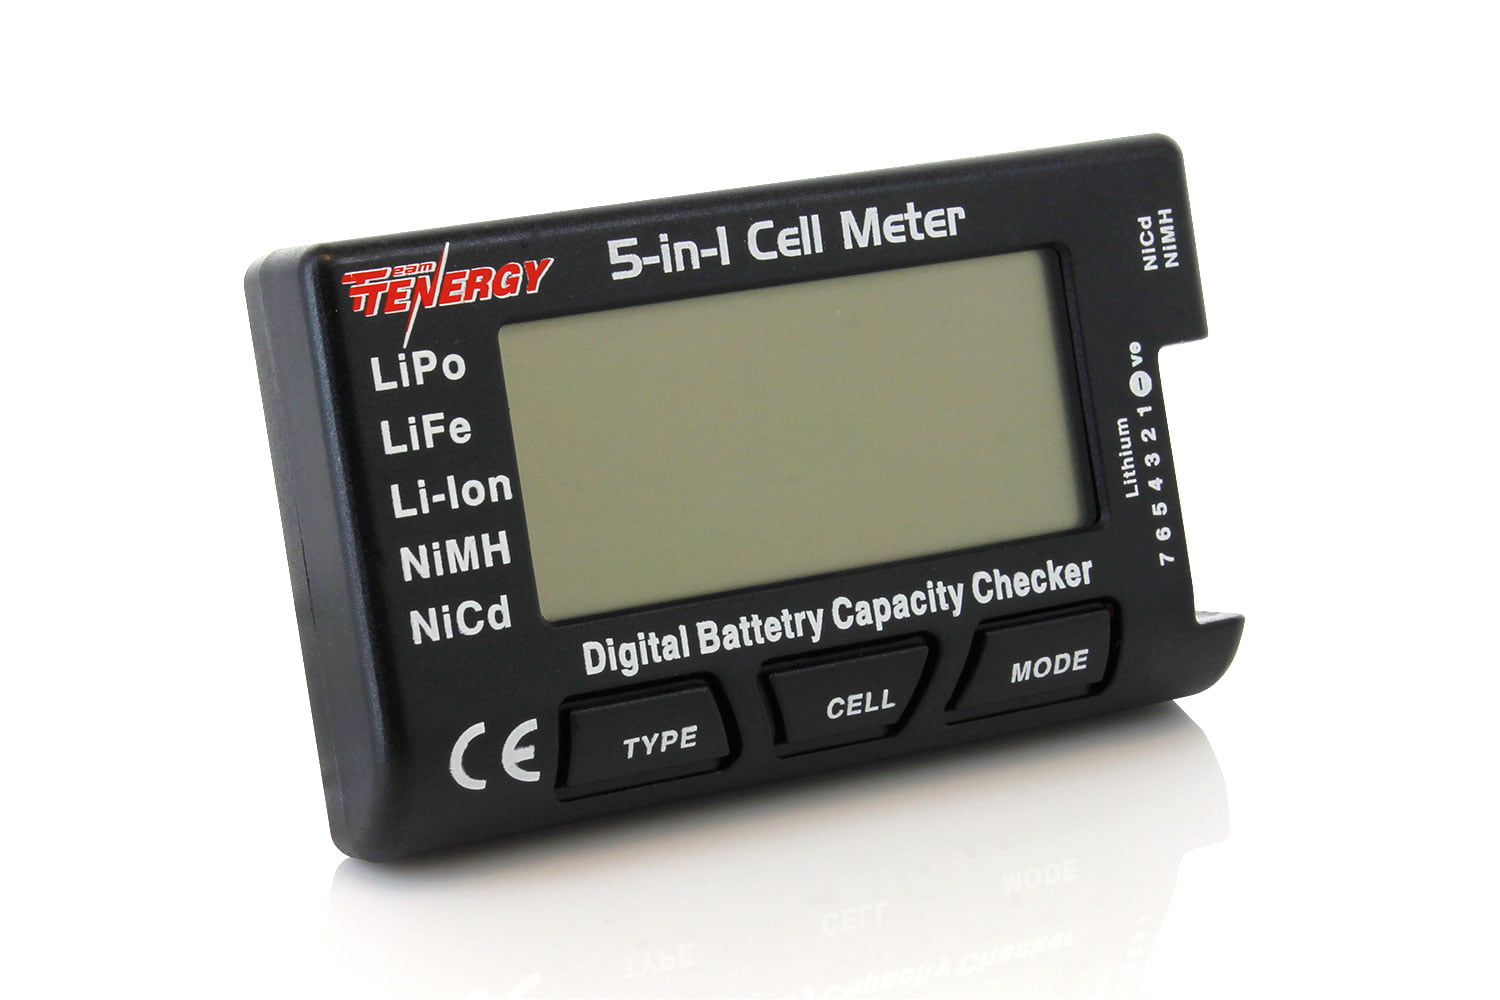 ISDT BattGo BG-8S Battery Meter LCD Display Digital Battery Capacity Checker Battery Balancer Battery Tester for LiPo/Life/Li-ion/NiMH/Nicd 